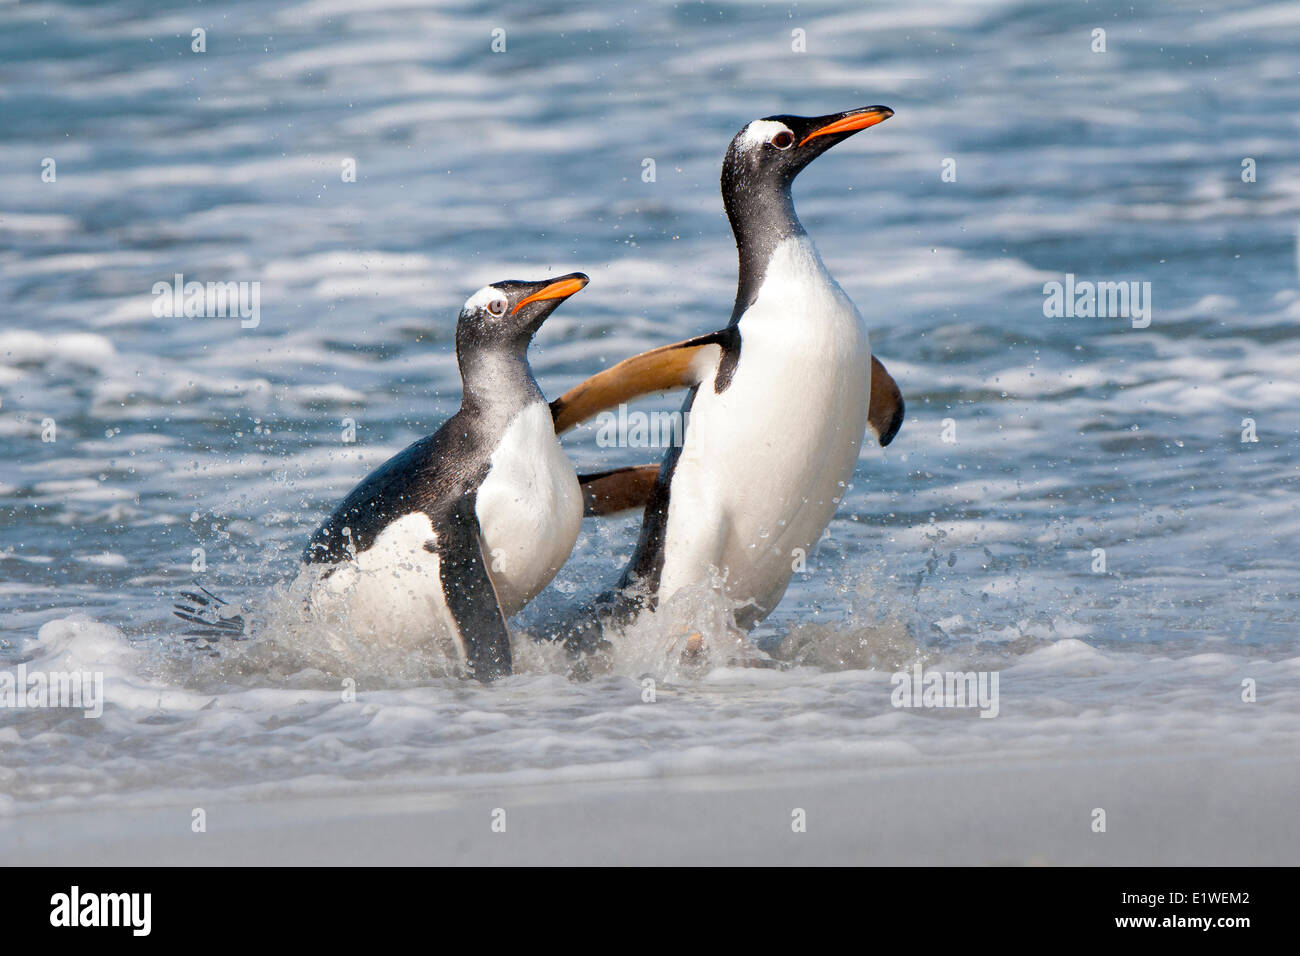 Gentoo penguins (Pygoscelis papua) returning from foraging at sea, Falkland Islands, Southern Atlantic ocean Stock Photo